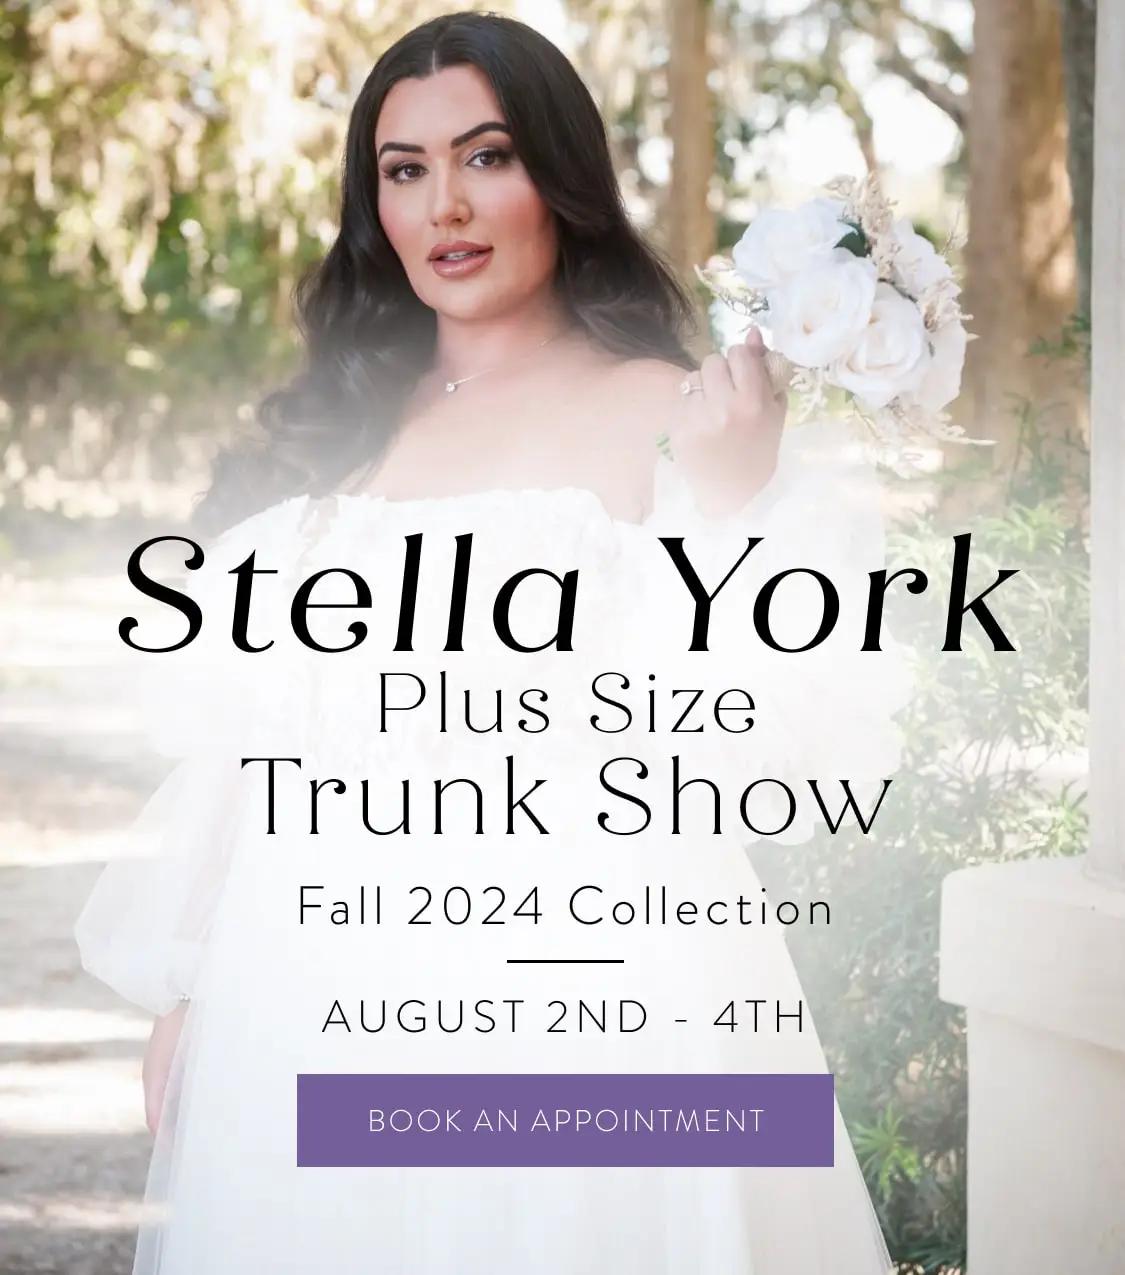 stella york plus size lace dress